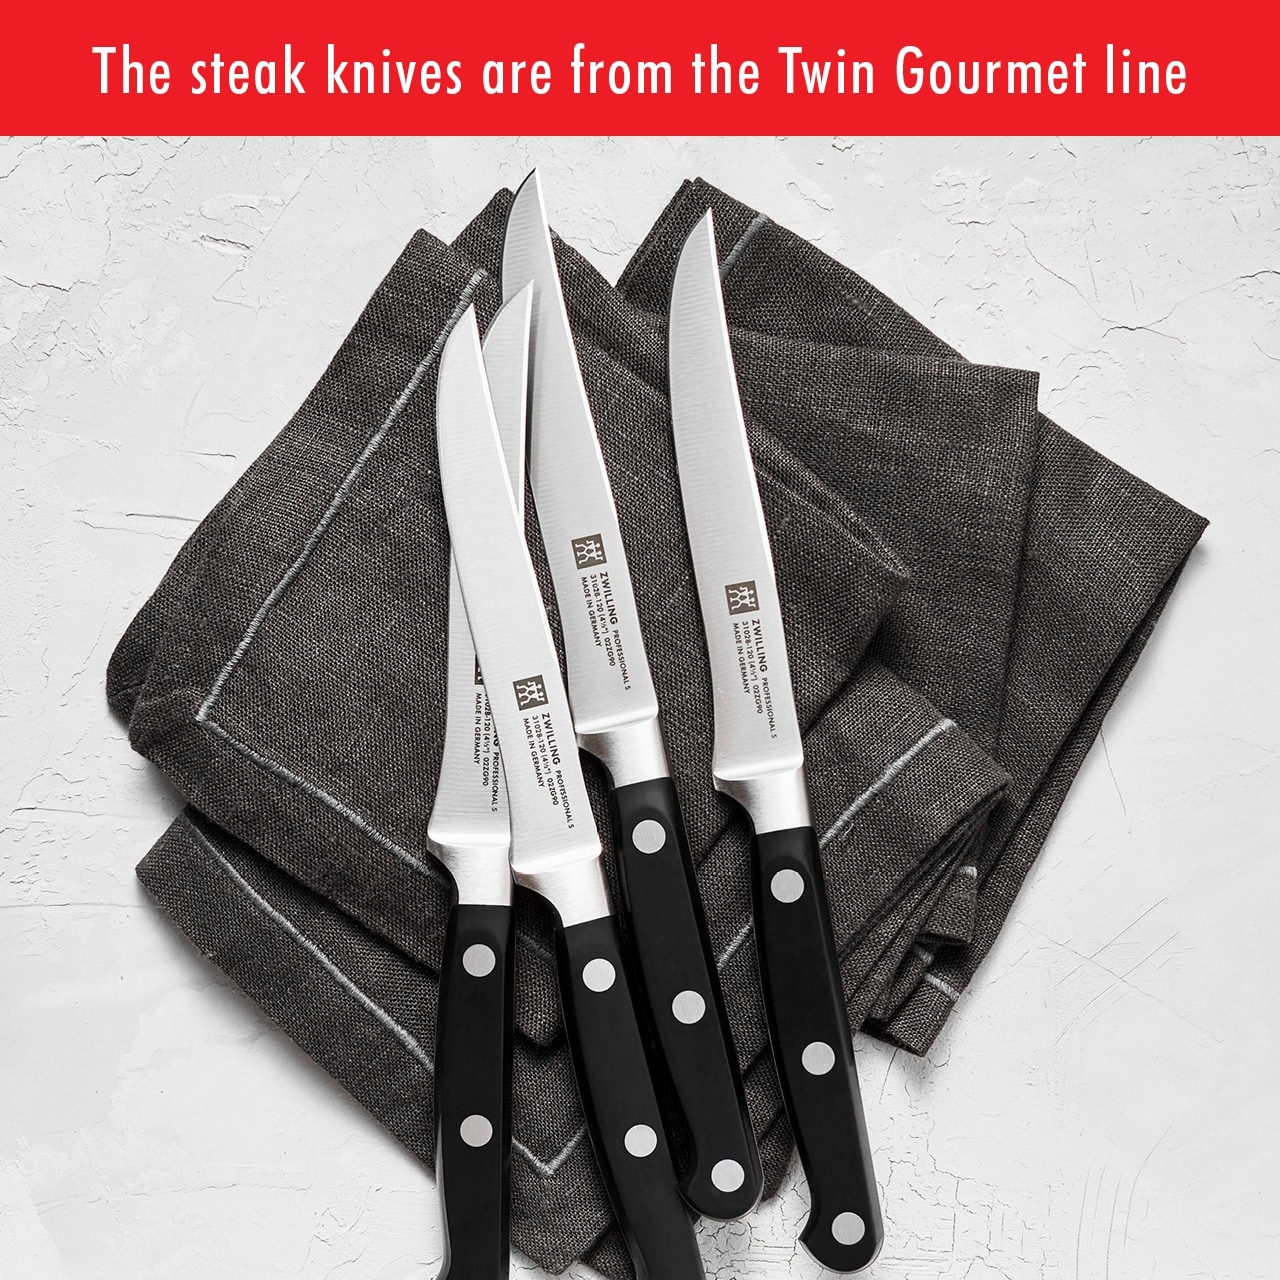 HENCKELS Classic Precision 16-Piece Kitchen Knife Set with Block, Chef  Knife, Steak Knife Set